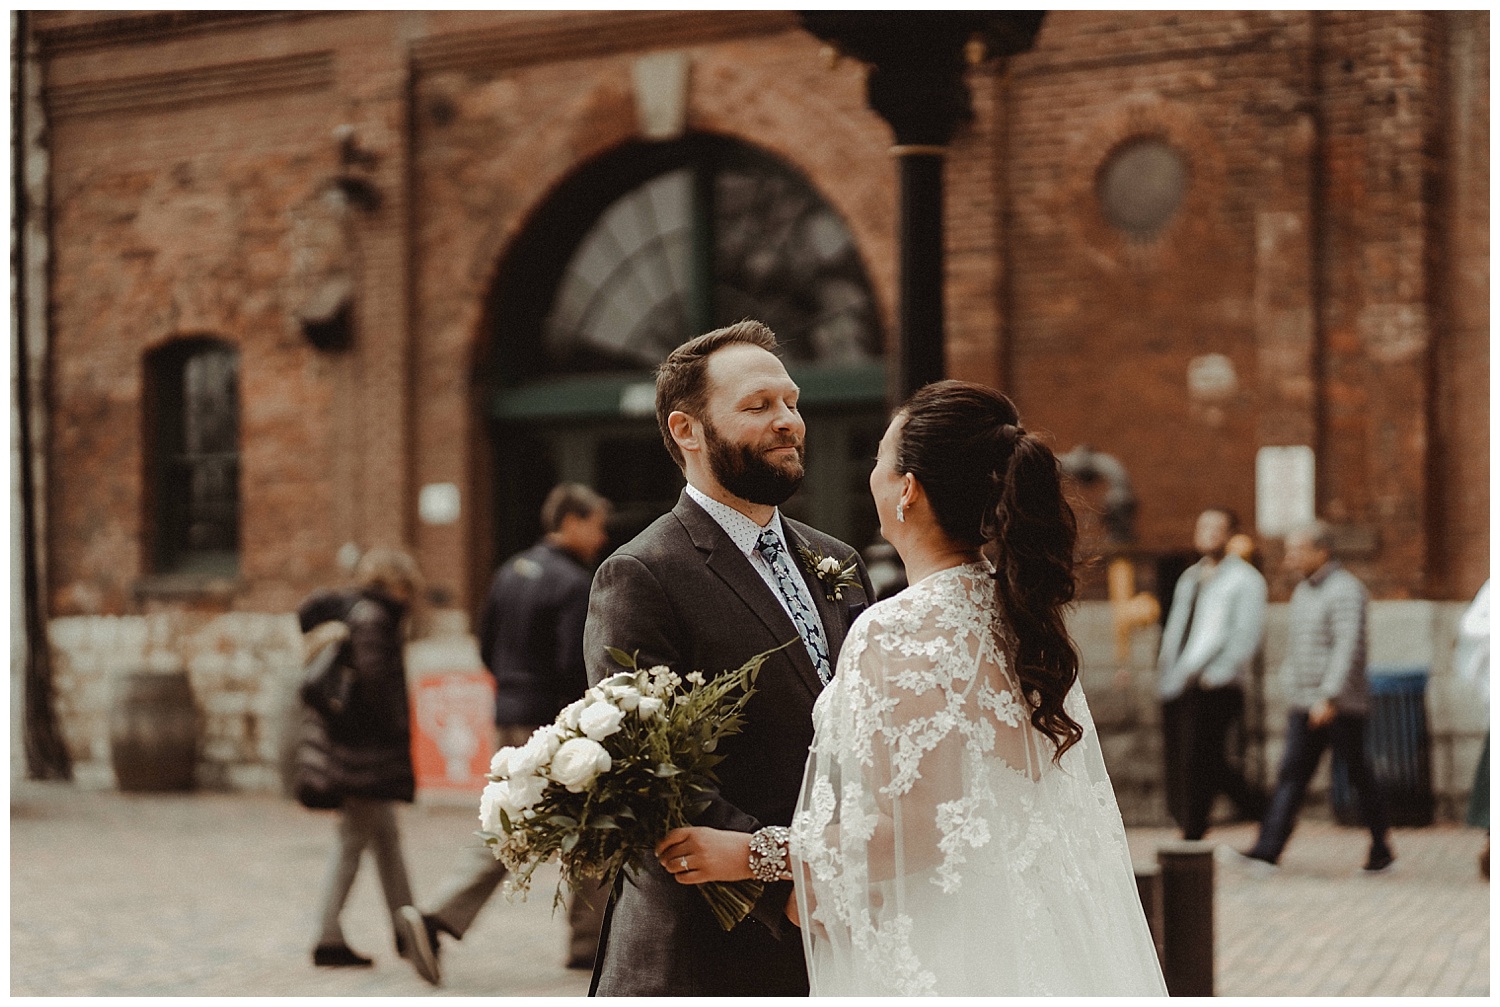 Katie Marie Photography | Archeo Wedding Arta Gallery Wedding | Distillery District Wedding | Toronto Wedding Photographer | Hamilton Toronto Ontario Wedding Photographer |_0010.jpg